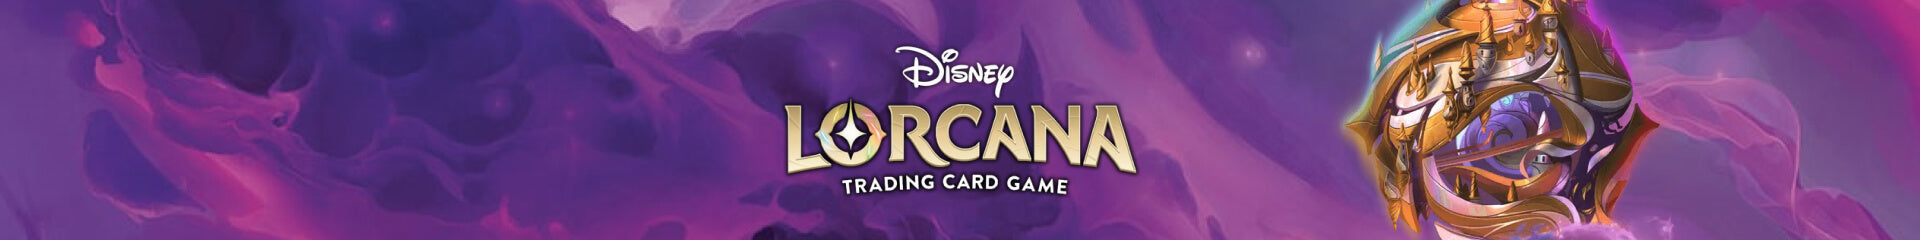 Lorcana Trading Card Game Disney | Otakura.com